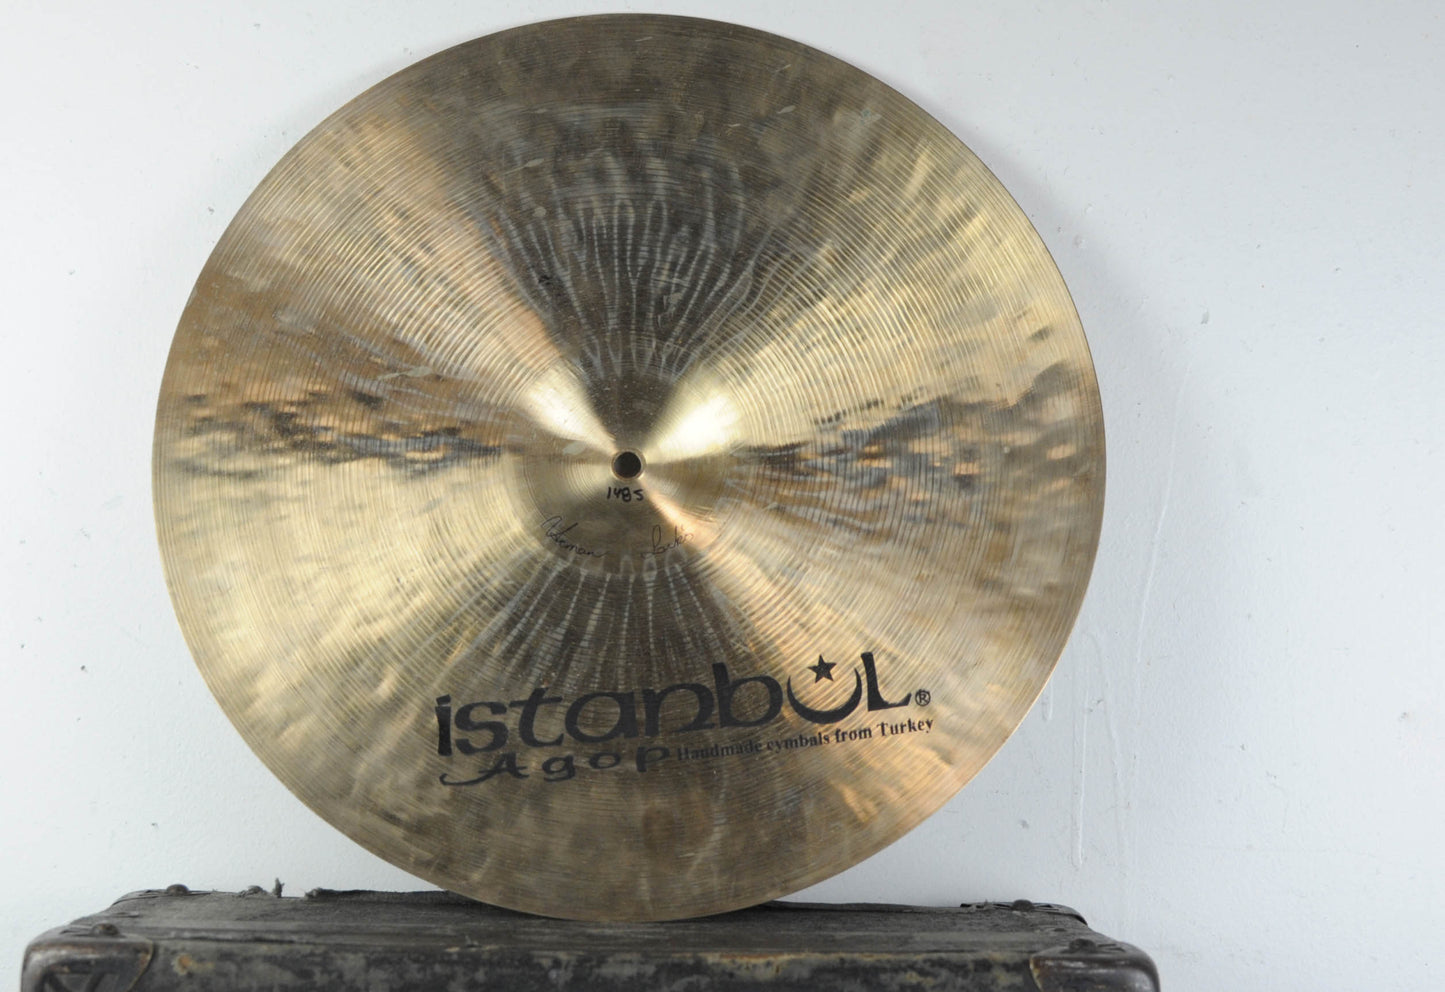 Istanbul Agop 18" Traditional Medium Thin Crash Cymbal 1485g